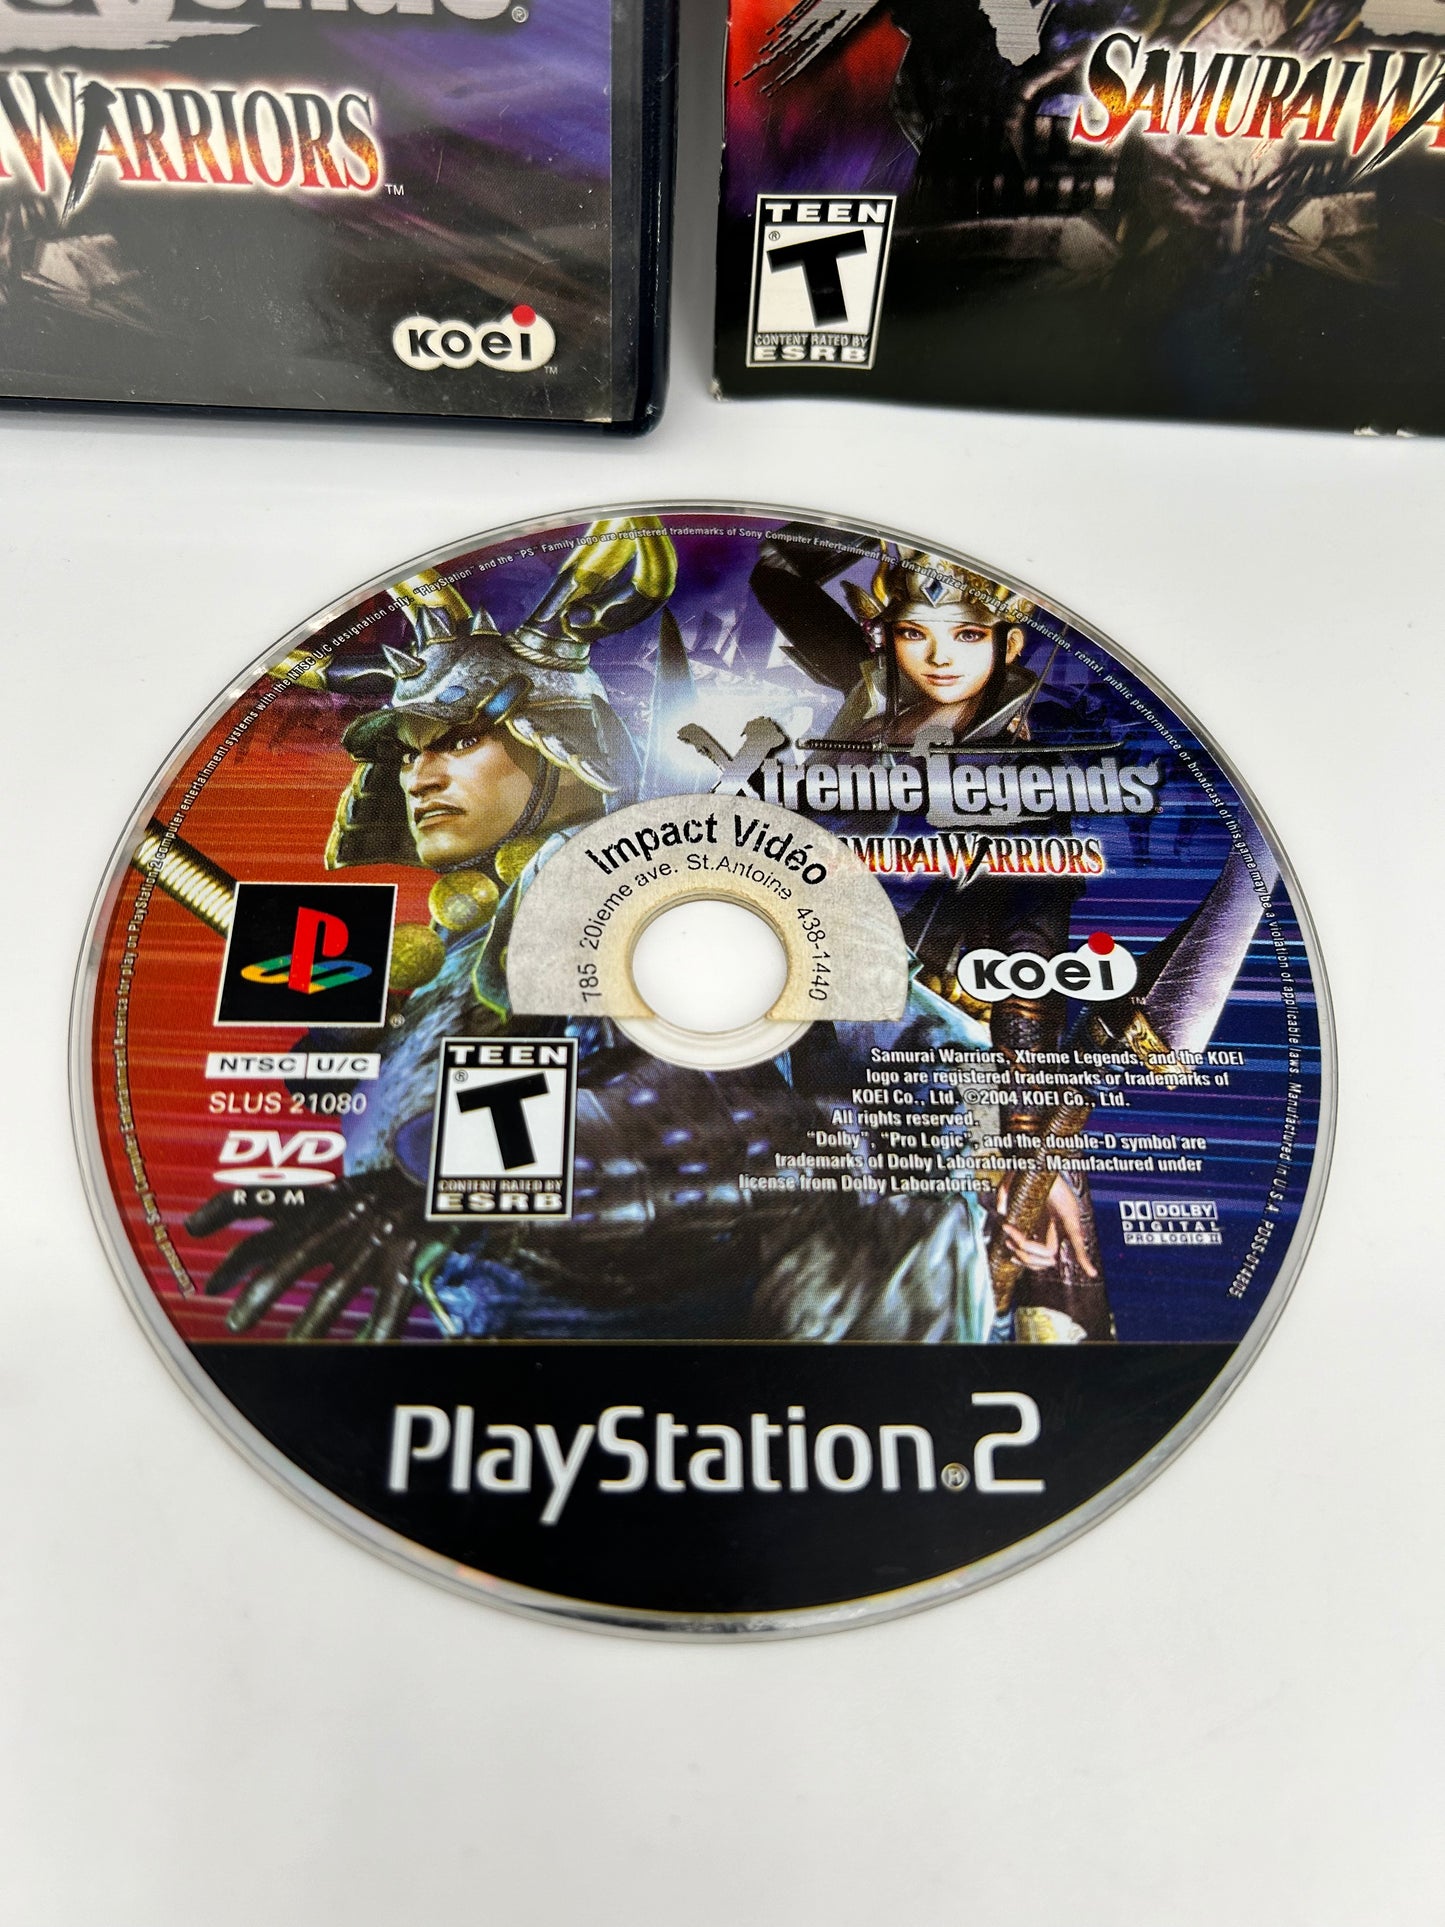 SONY PLAYSTATiON 2 [PS2] | XTREME LEGENDS SAMURAI WARRiORS